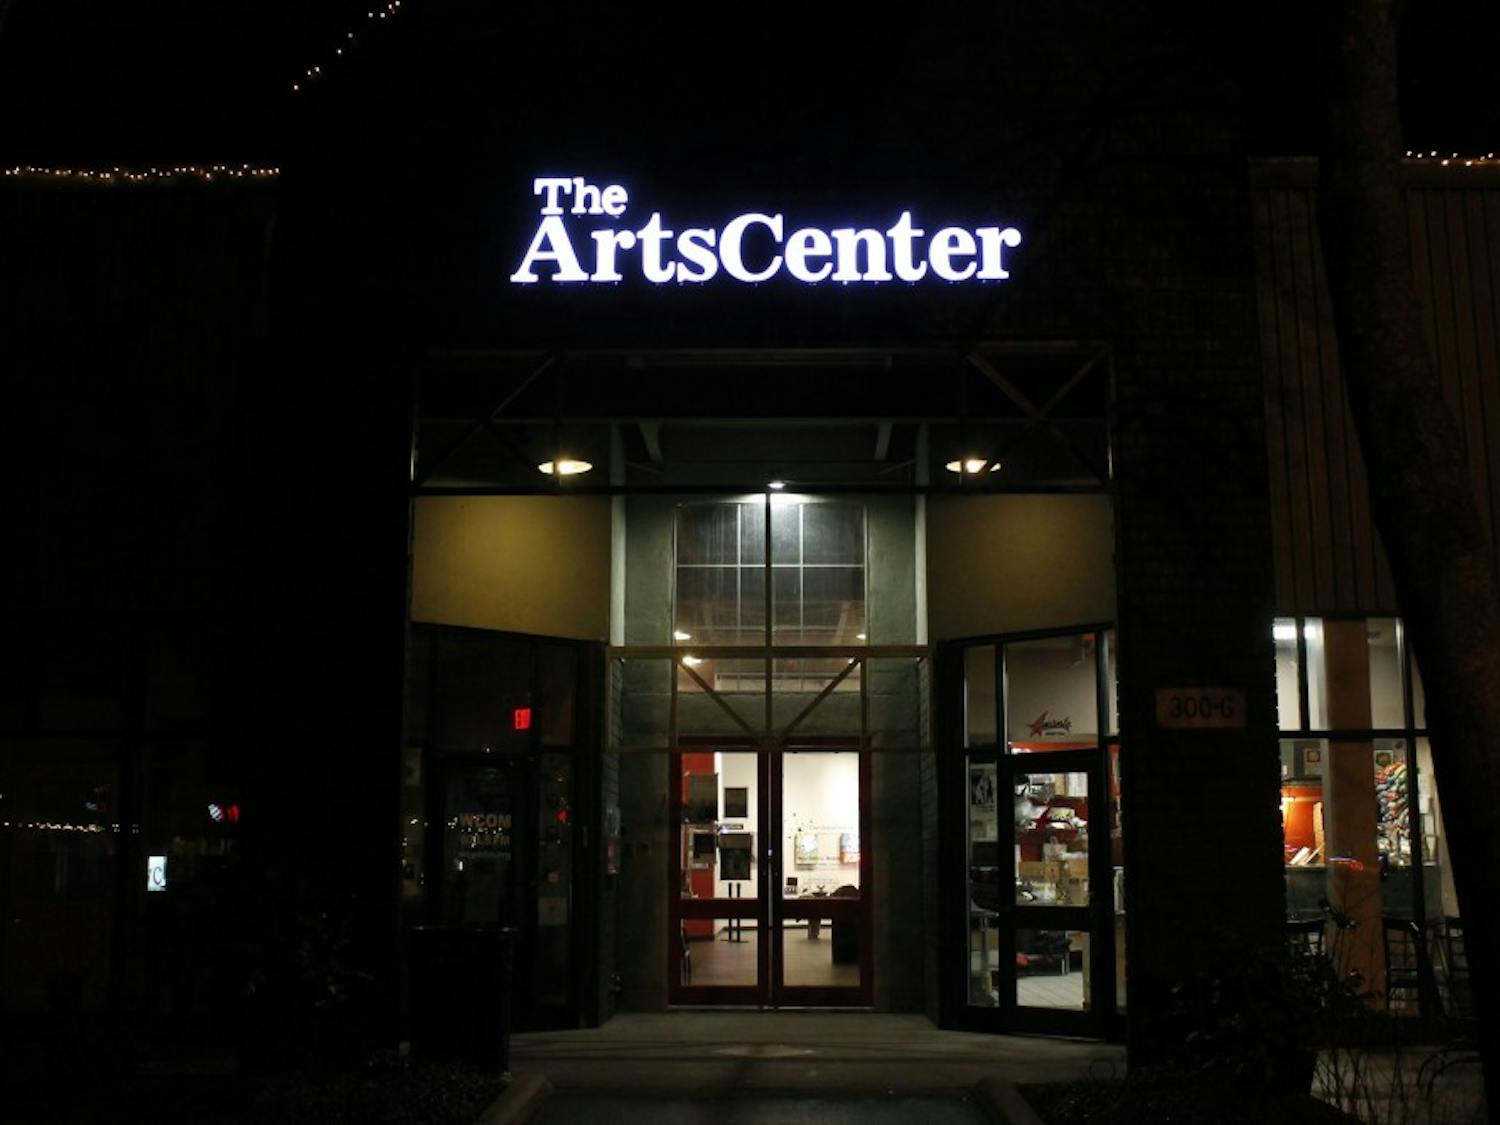 The Arts Center